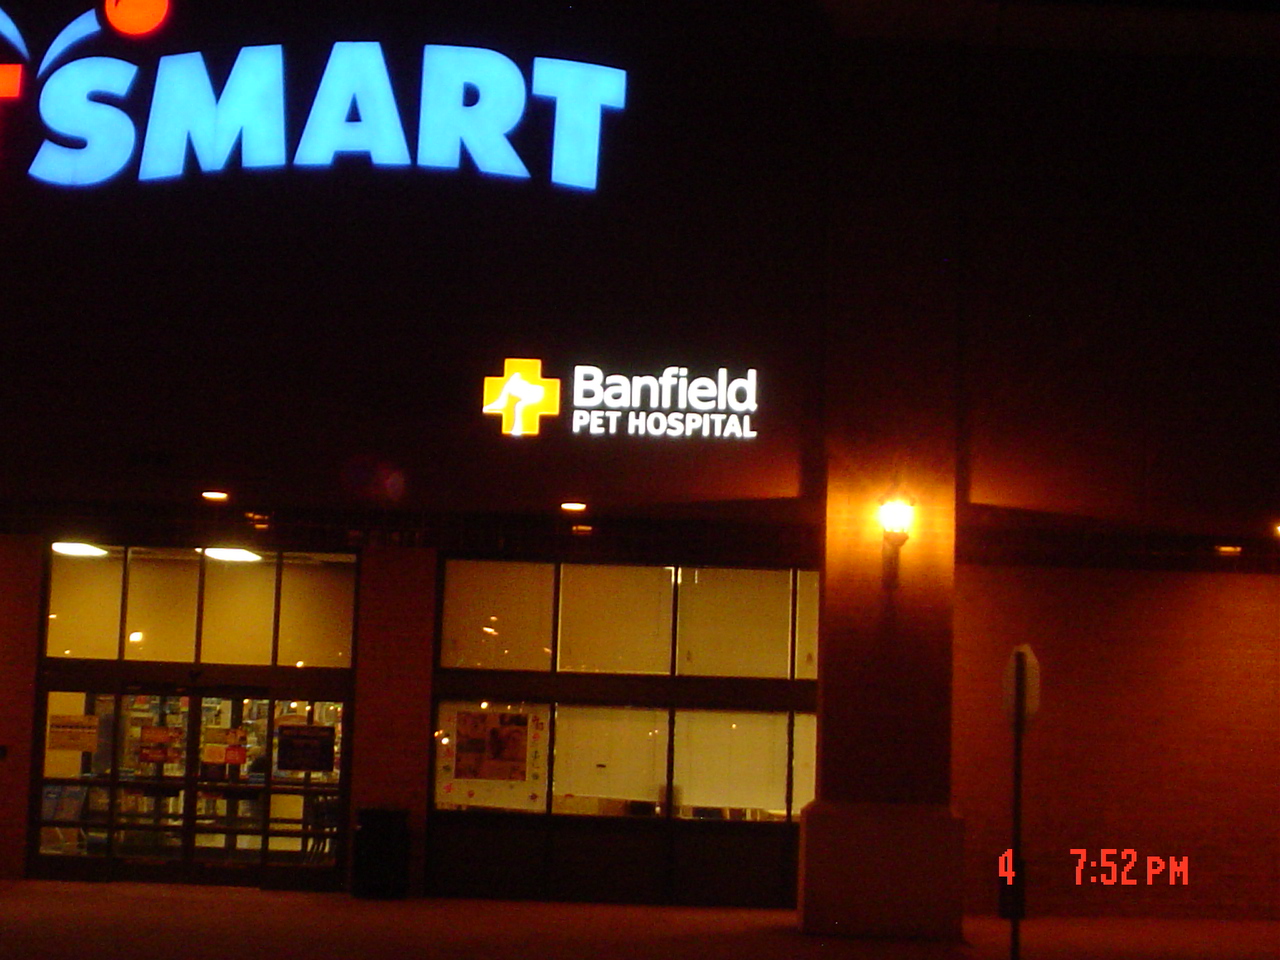 Banfield Pet Hospital - Fort Collins Banfield Pet Hospital Fort Collins (970)204-4088